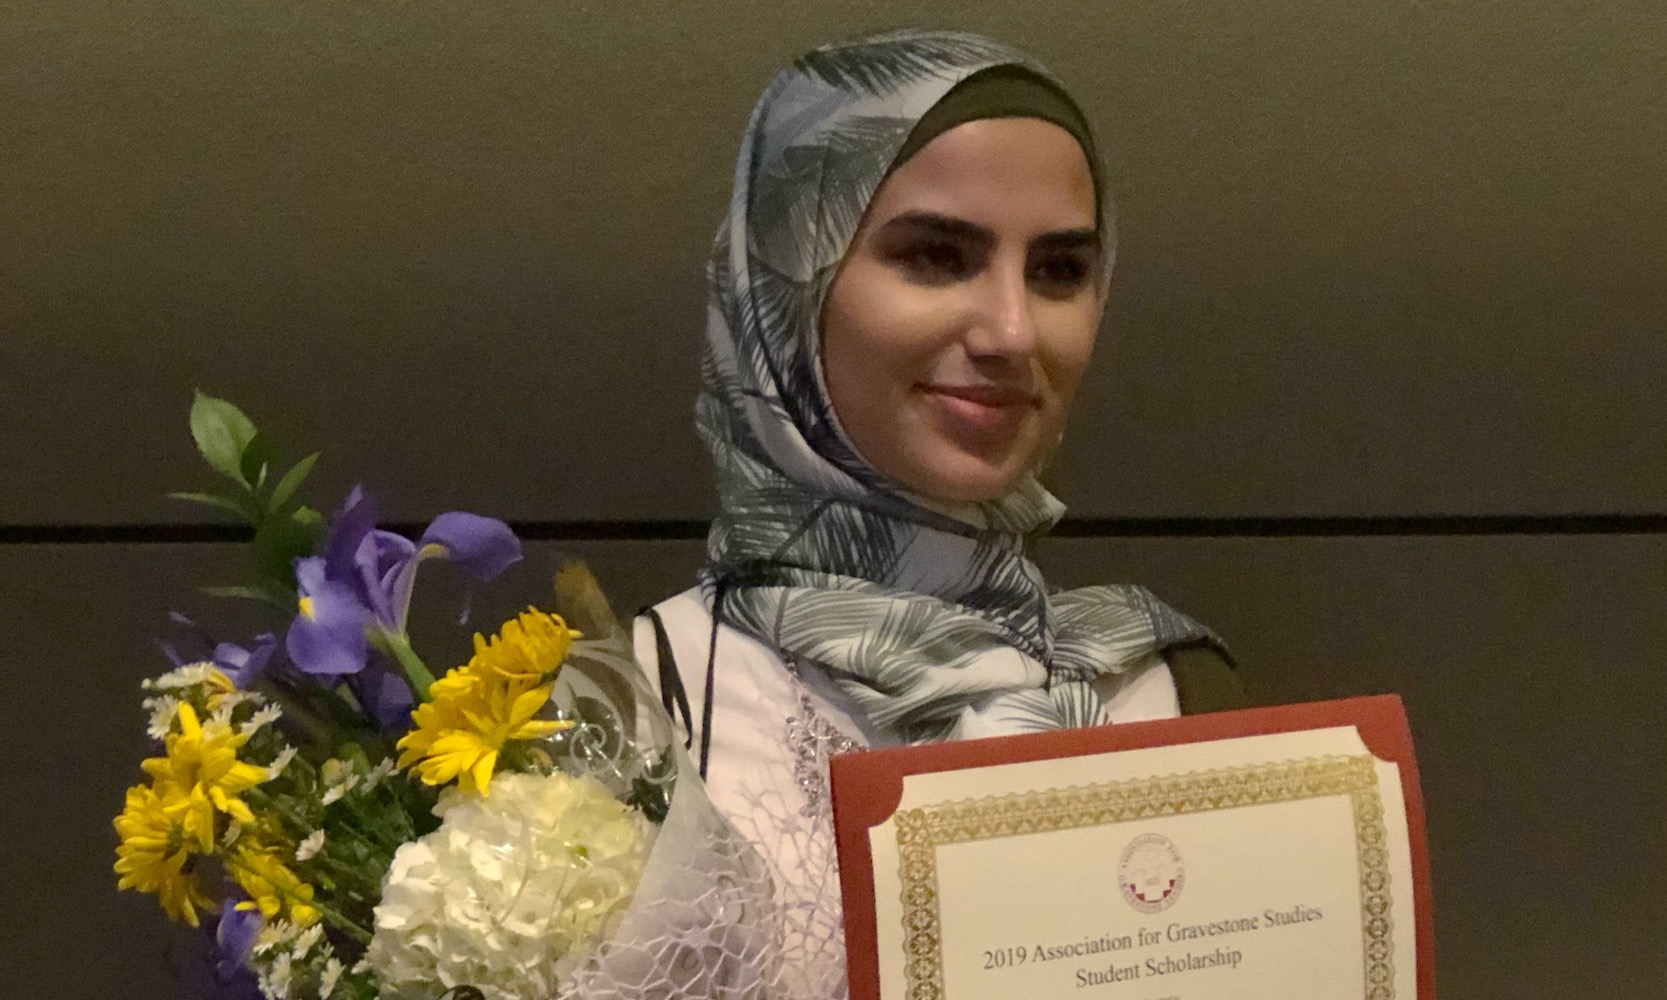 Senior Zeinab Alsheraa named Student Scholar by Association for Graveyard Studies 